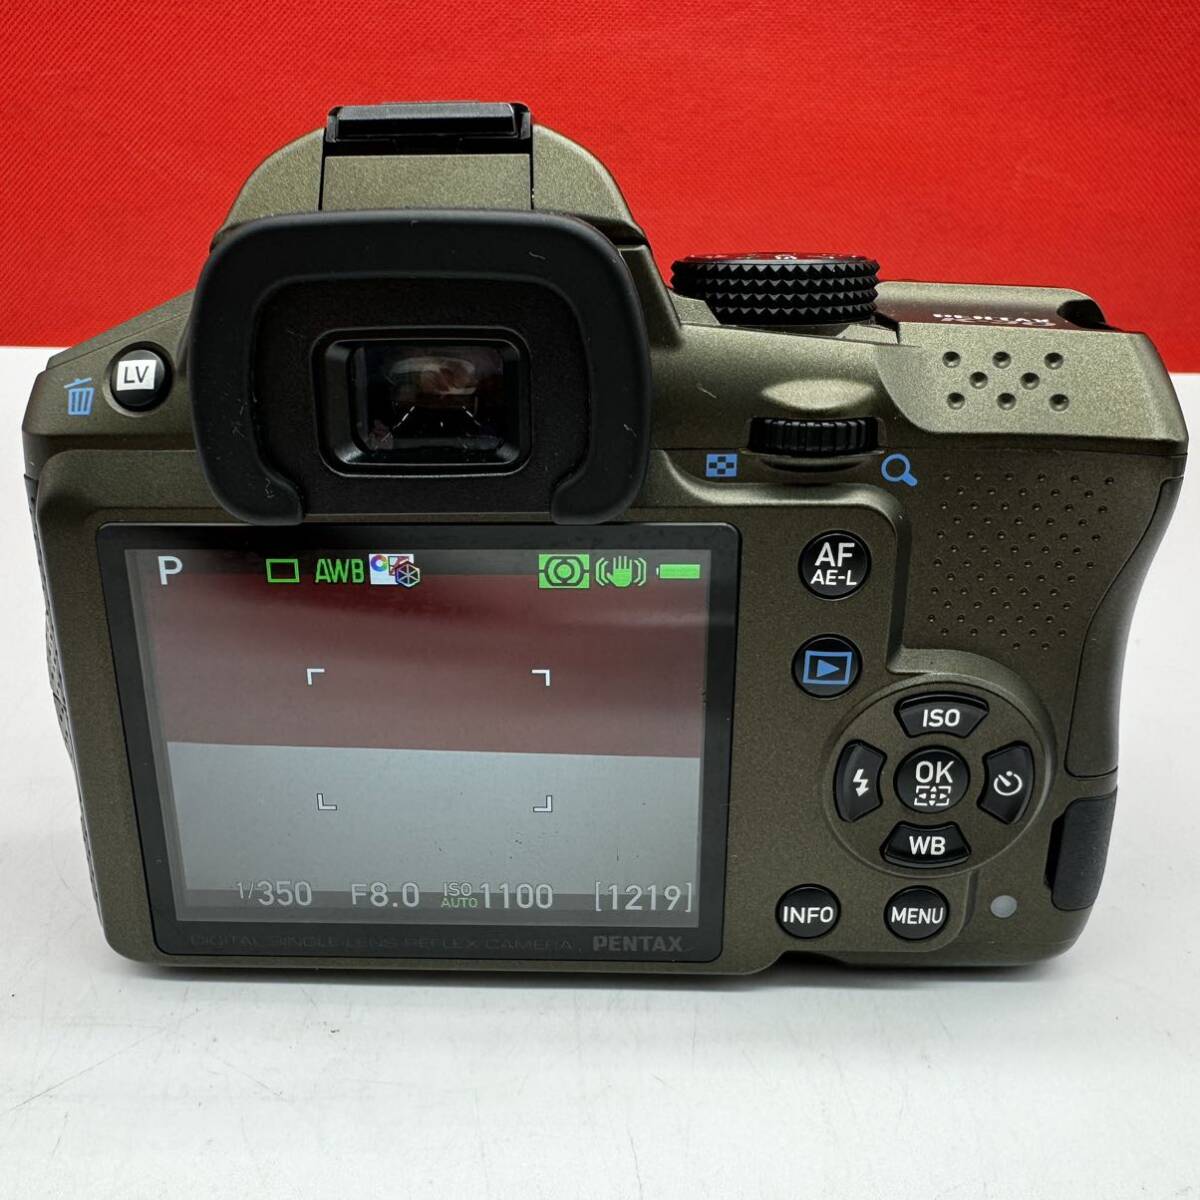 ▲ PENTAX K30 ボディ SMC PENTAX-DA 18-135mm F3.5-5.6 シルキーグリーン デジタル一眼レフカメラ 動作確認済 ペンタックス